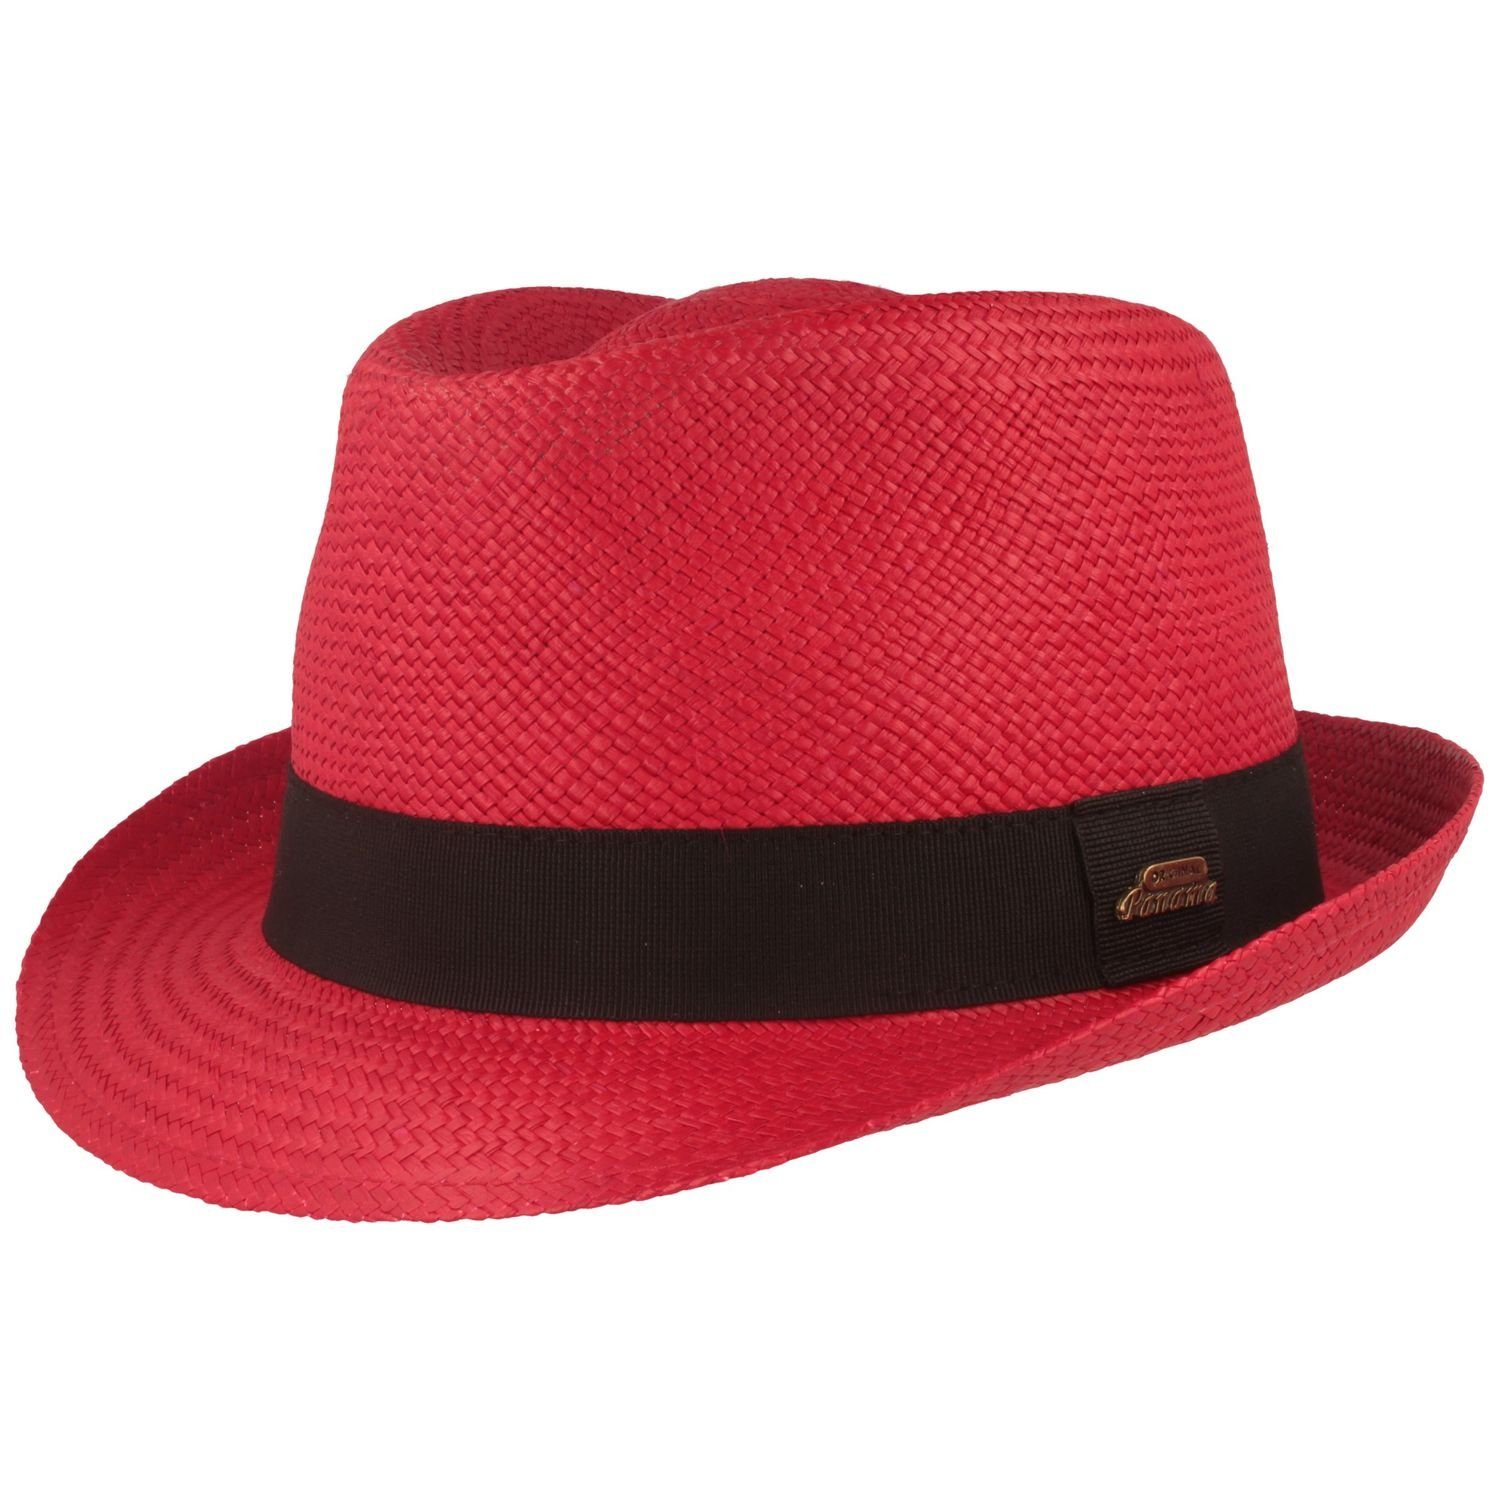 Strohhut Panama Breiter rot mit Trilby 50+ original Hut UV-Schutz